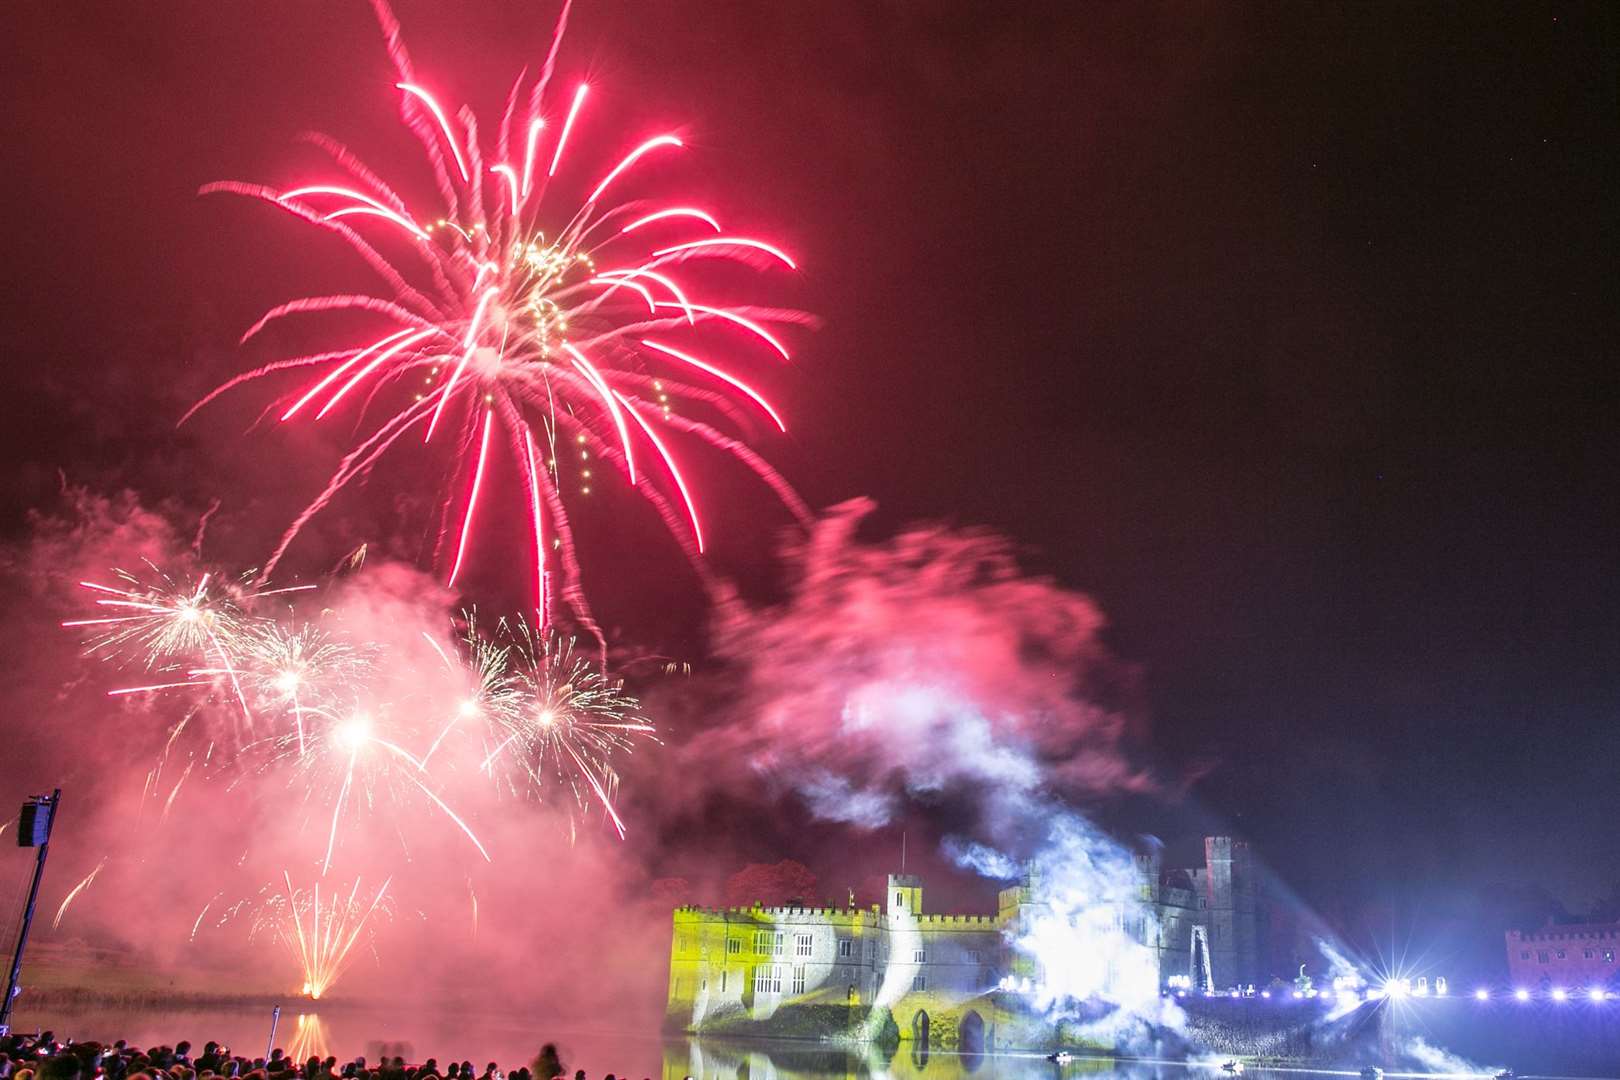 Leeds Castle Fireworks 2019 sponsored by KMFM. Fireworks light the skies around Leeds Castle. Picture: Matthew Walker. (42836929)